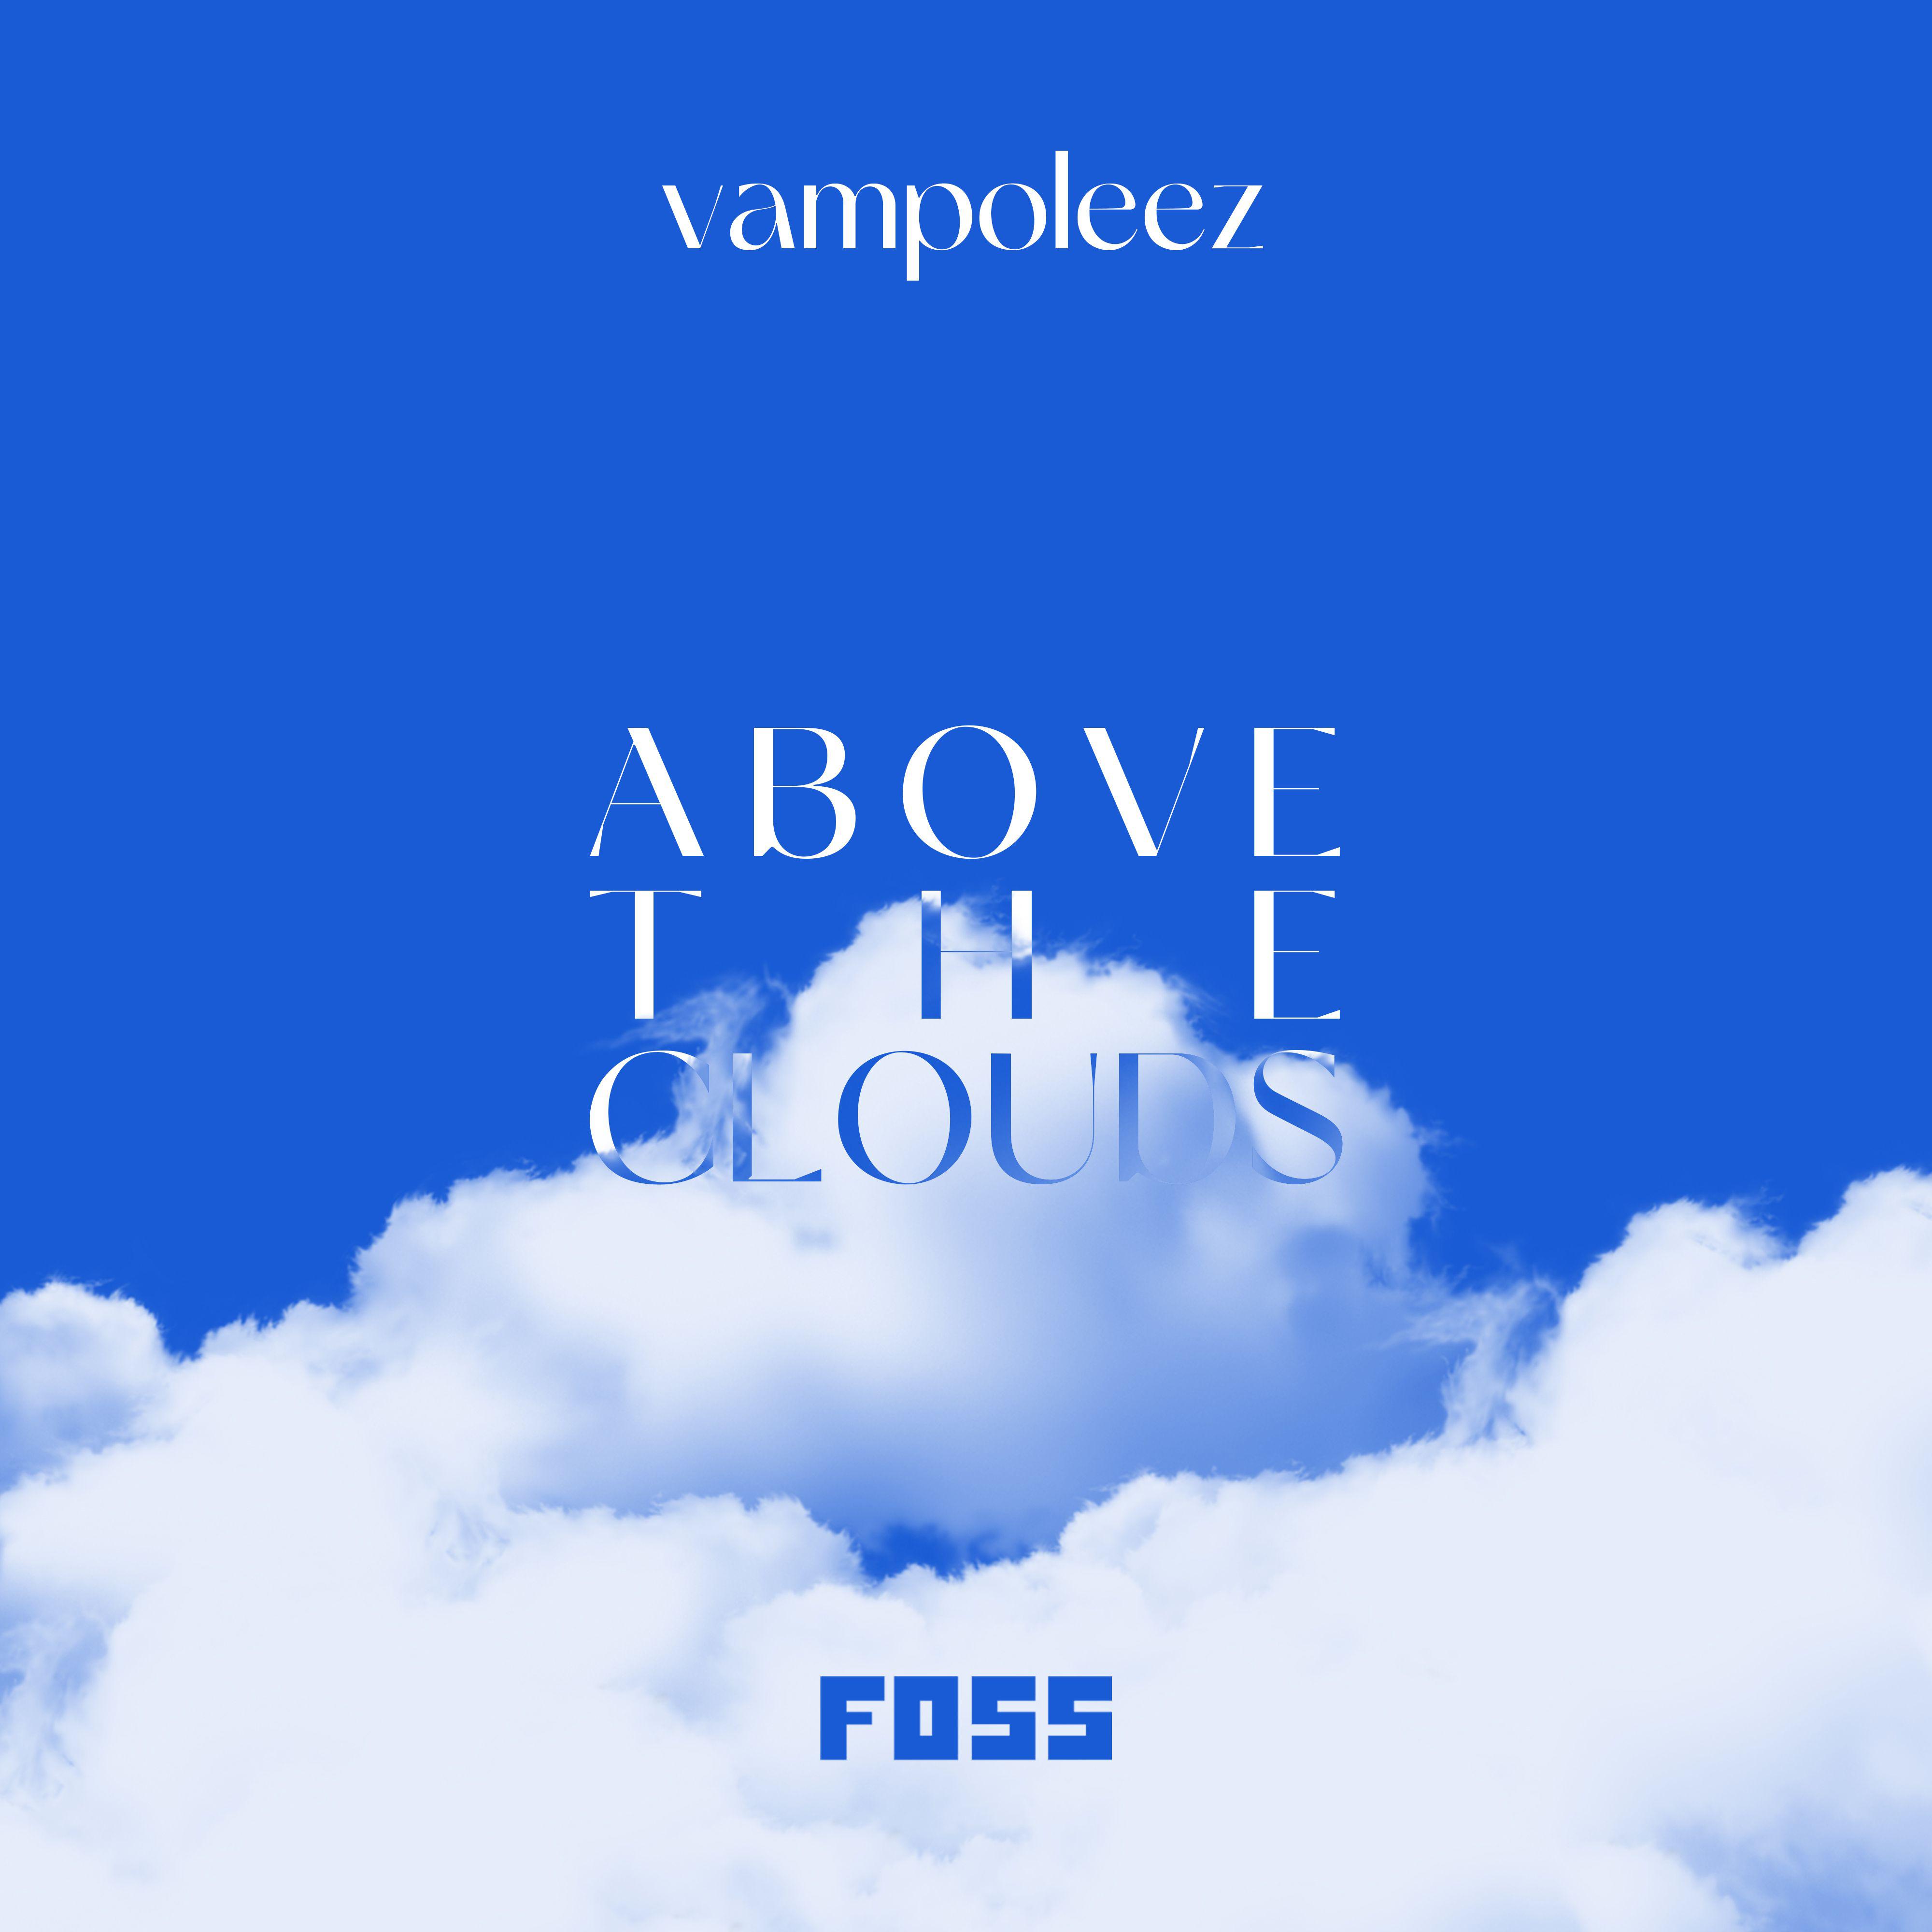 vampoleez - Above The Clouds